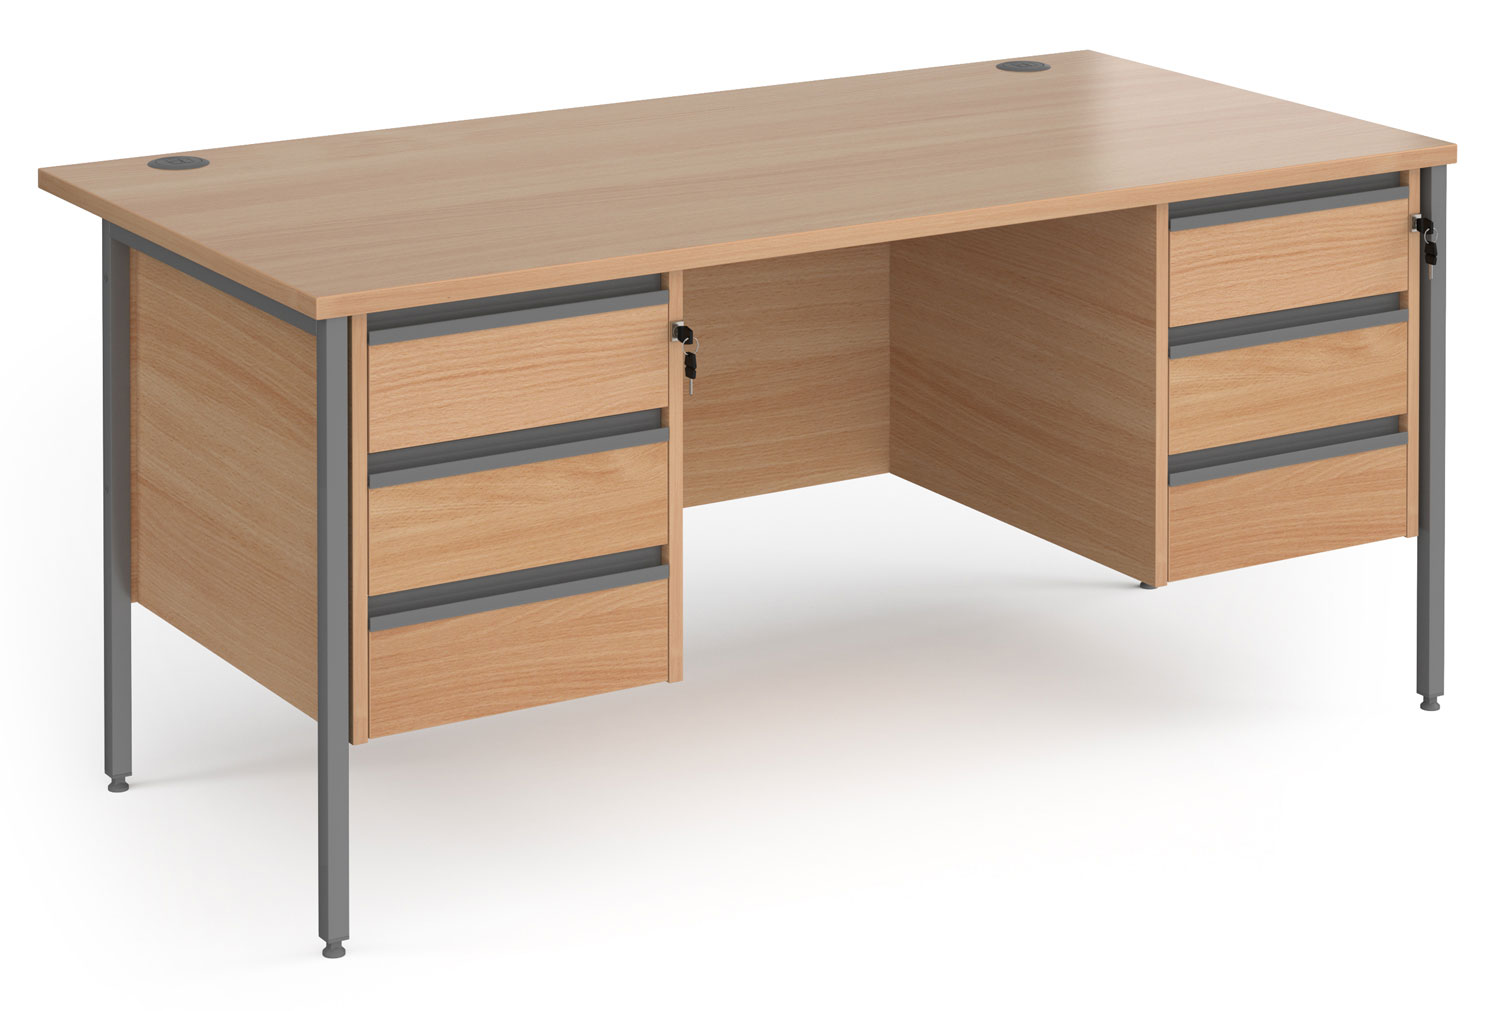 Value Line Classic+ Rectangular H-Leg Office Desk 3+3 Drawers (Graphite Leg), 160wx80dx73h (cm), Beech, Express Delivery